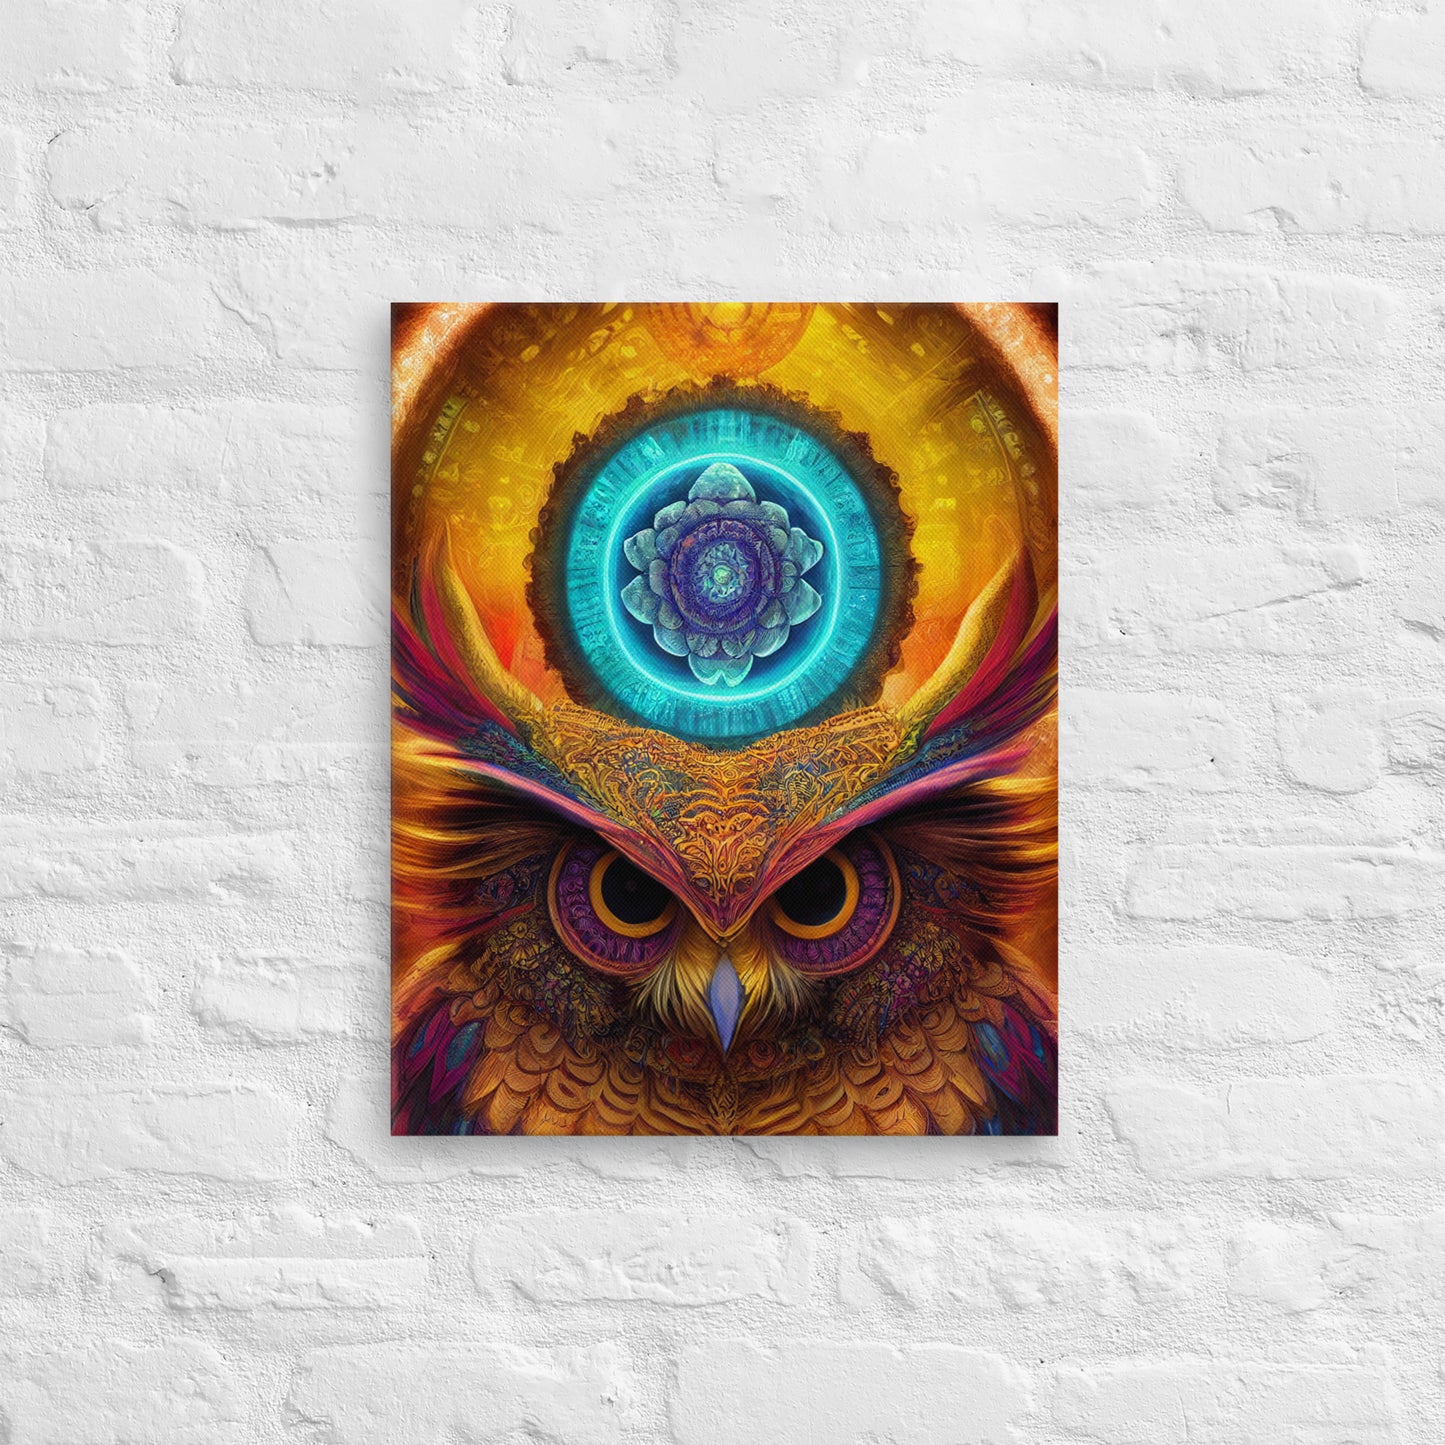 Mandala Owl 1.0 Thin Canvas Wall Art